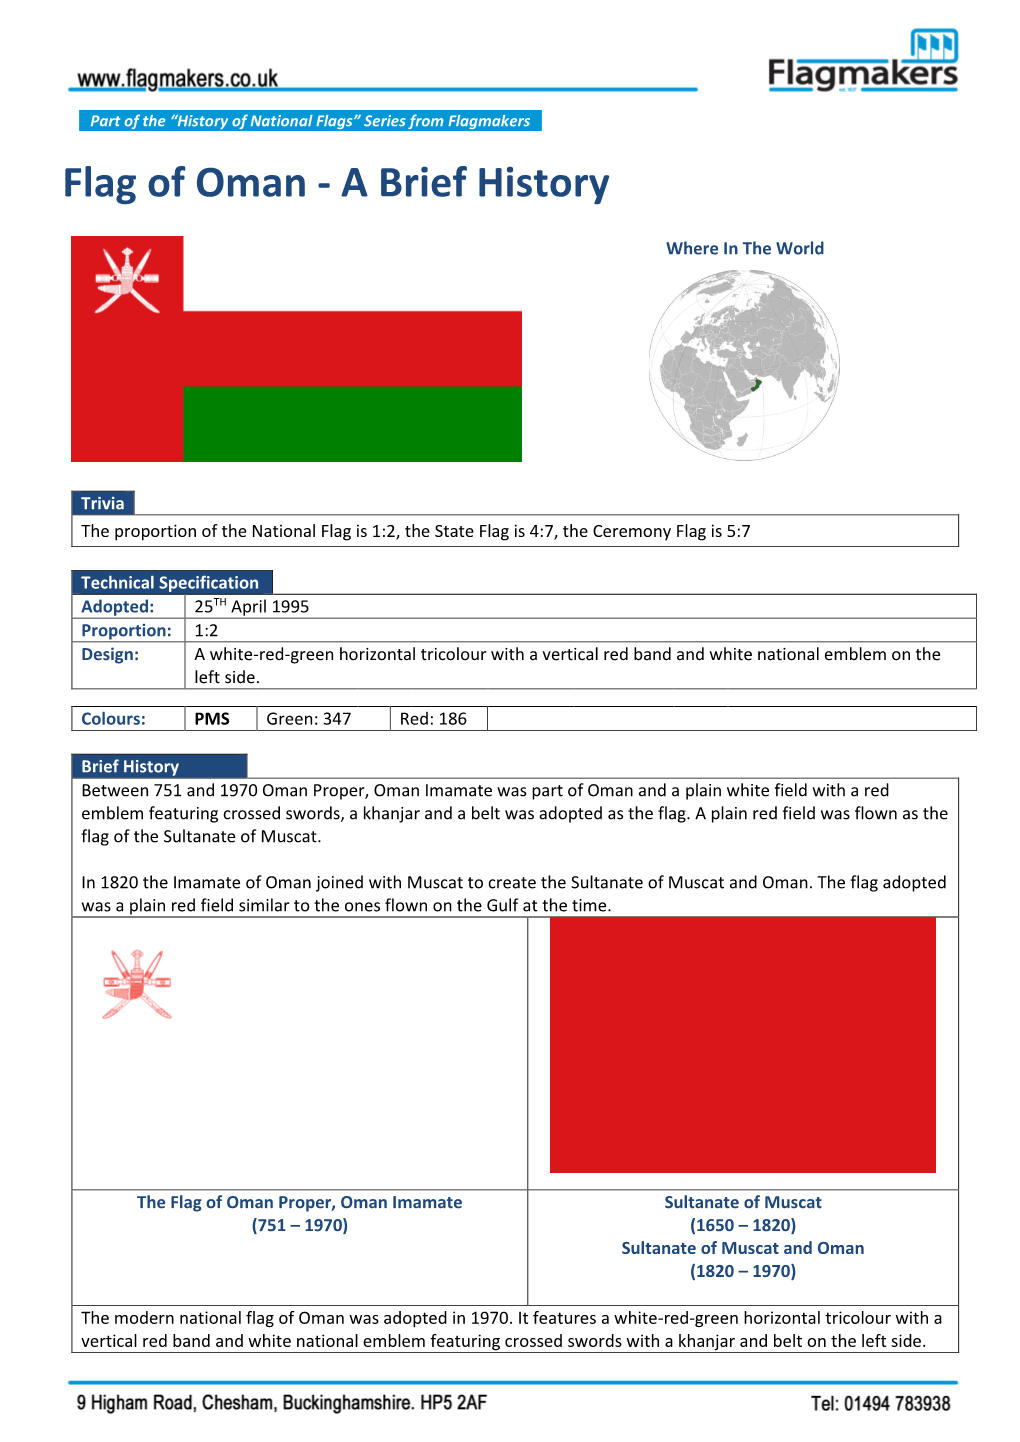 Flag of Oman - a Brief History